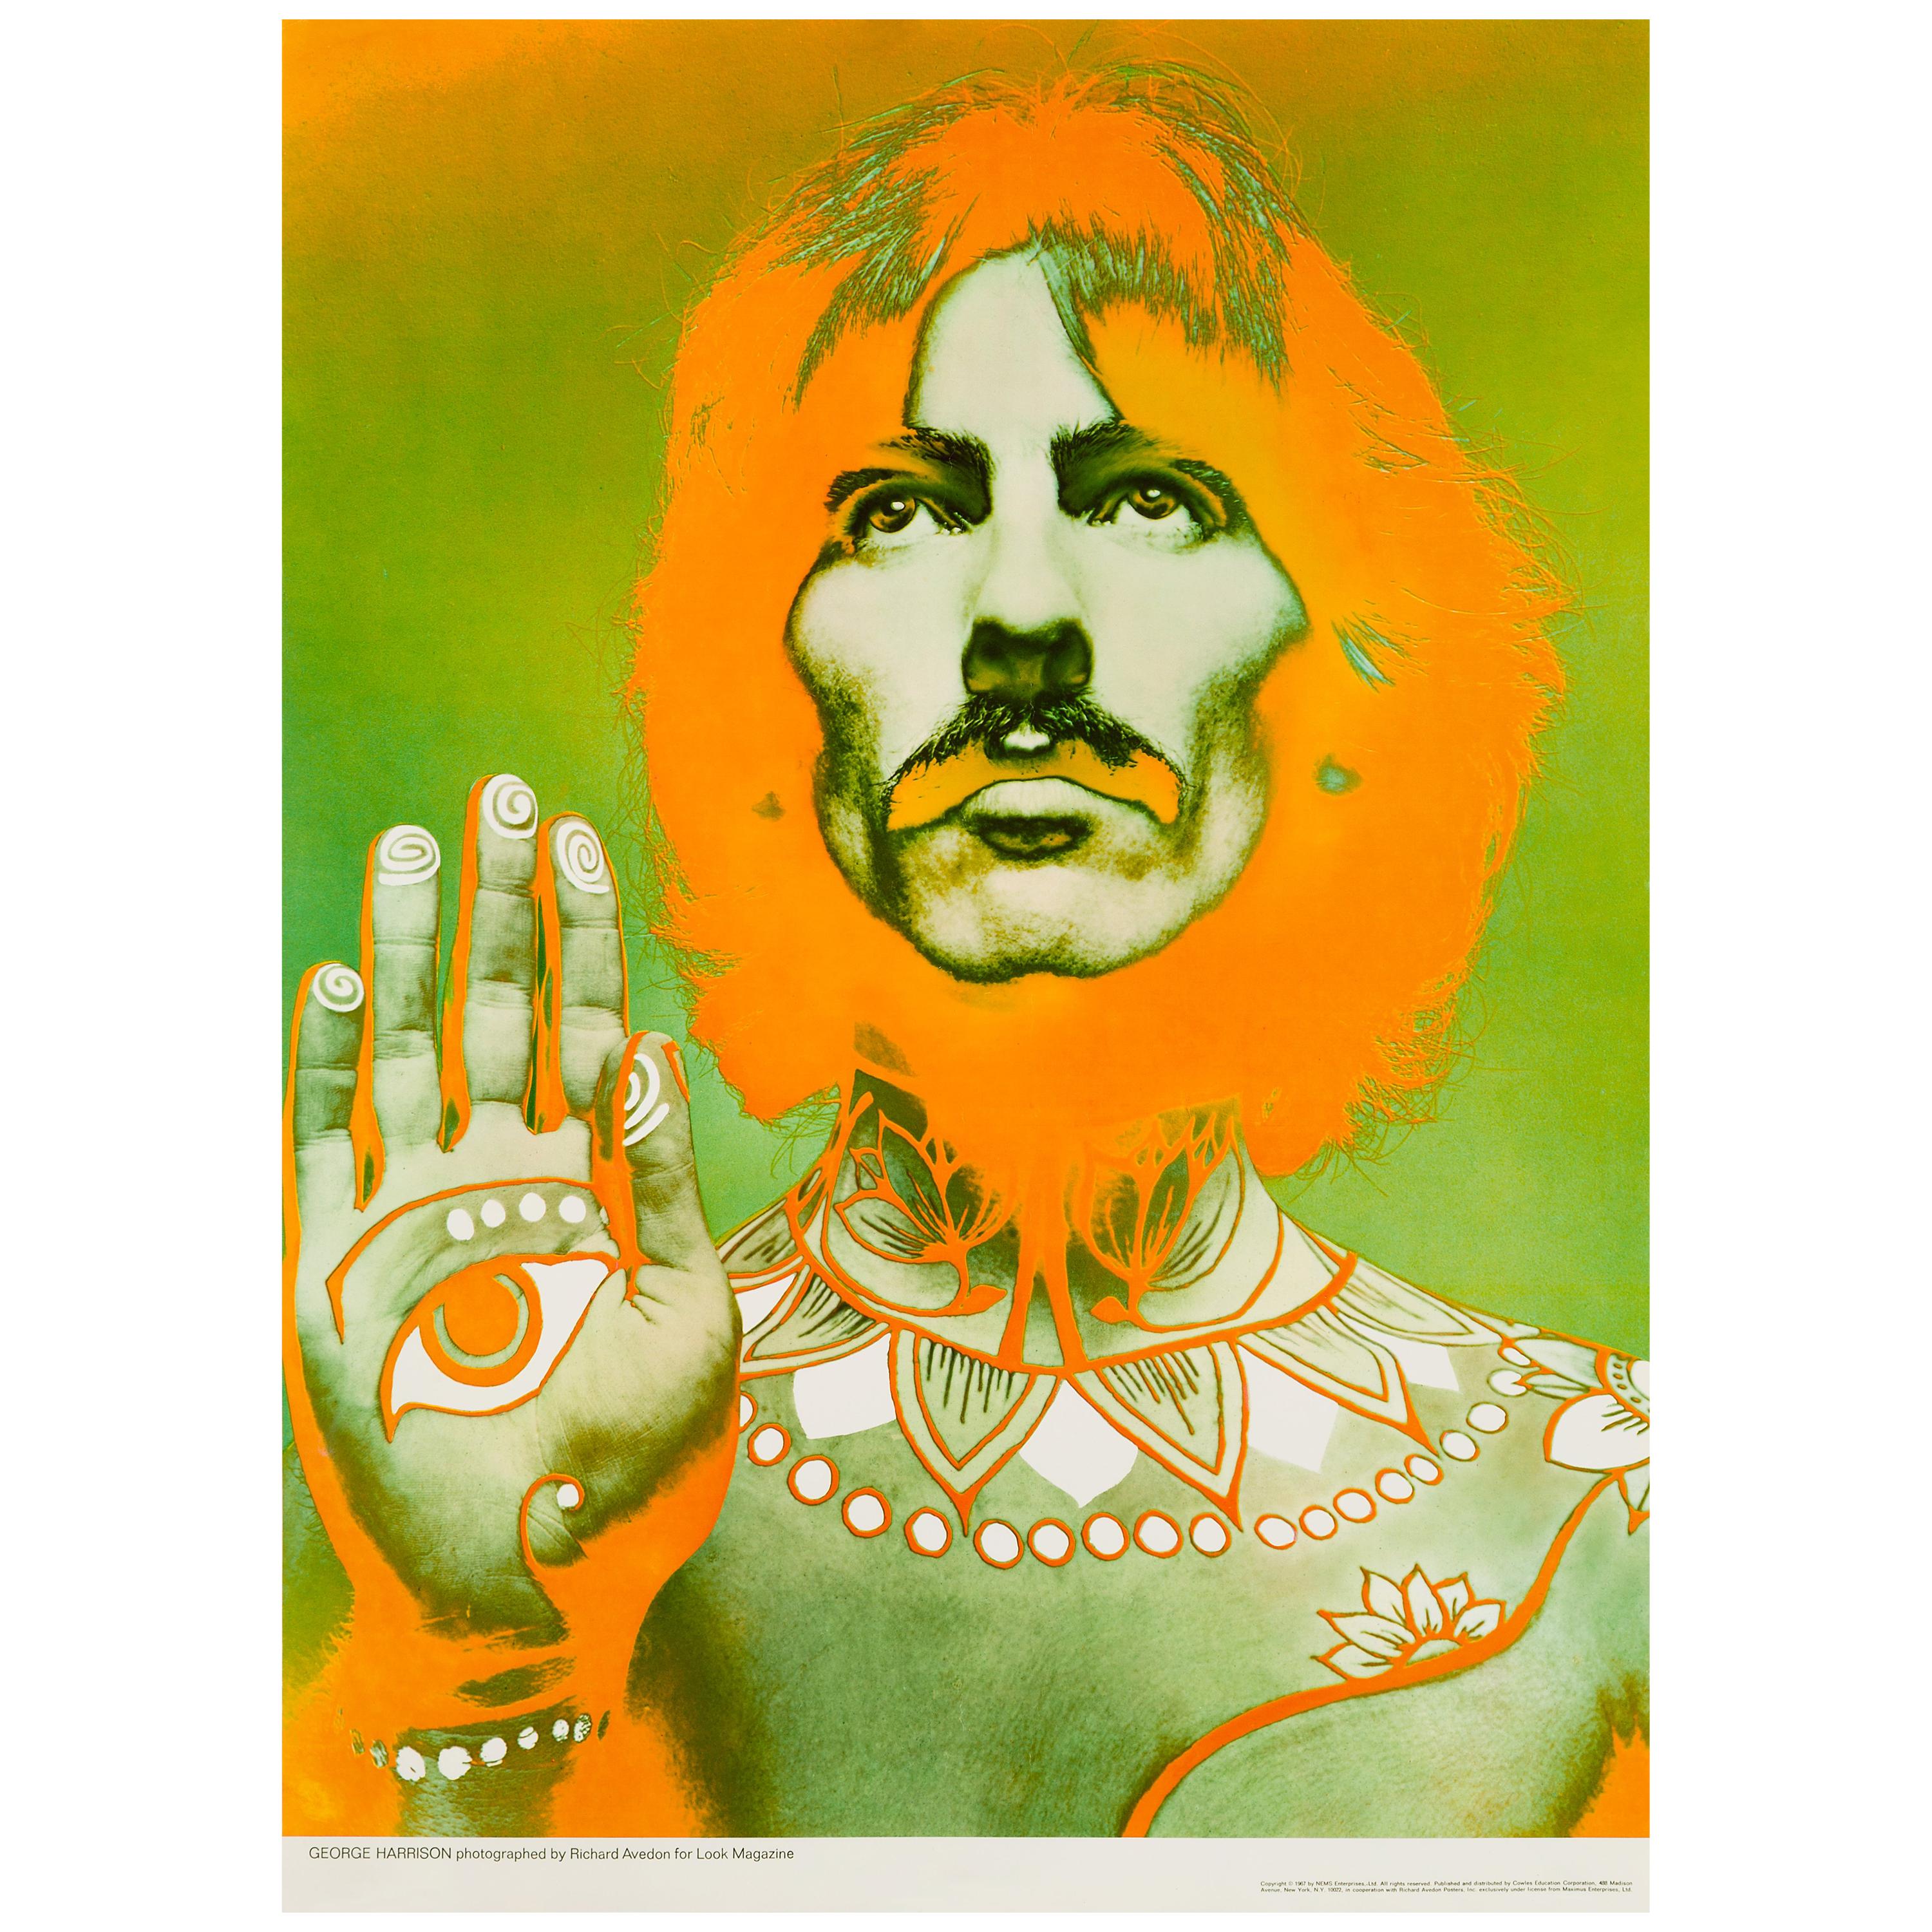 George Harrison Original Vintage Poster by Richard Avedon, 1967